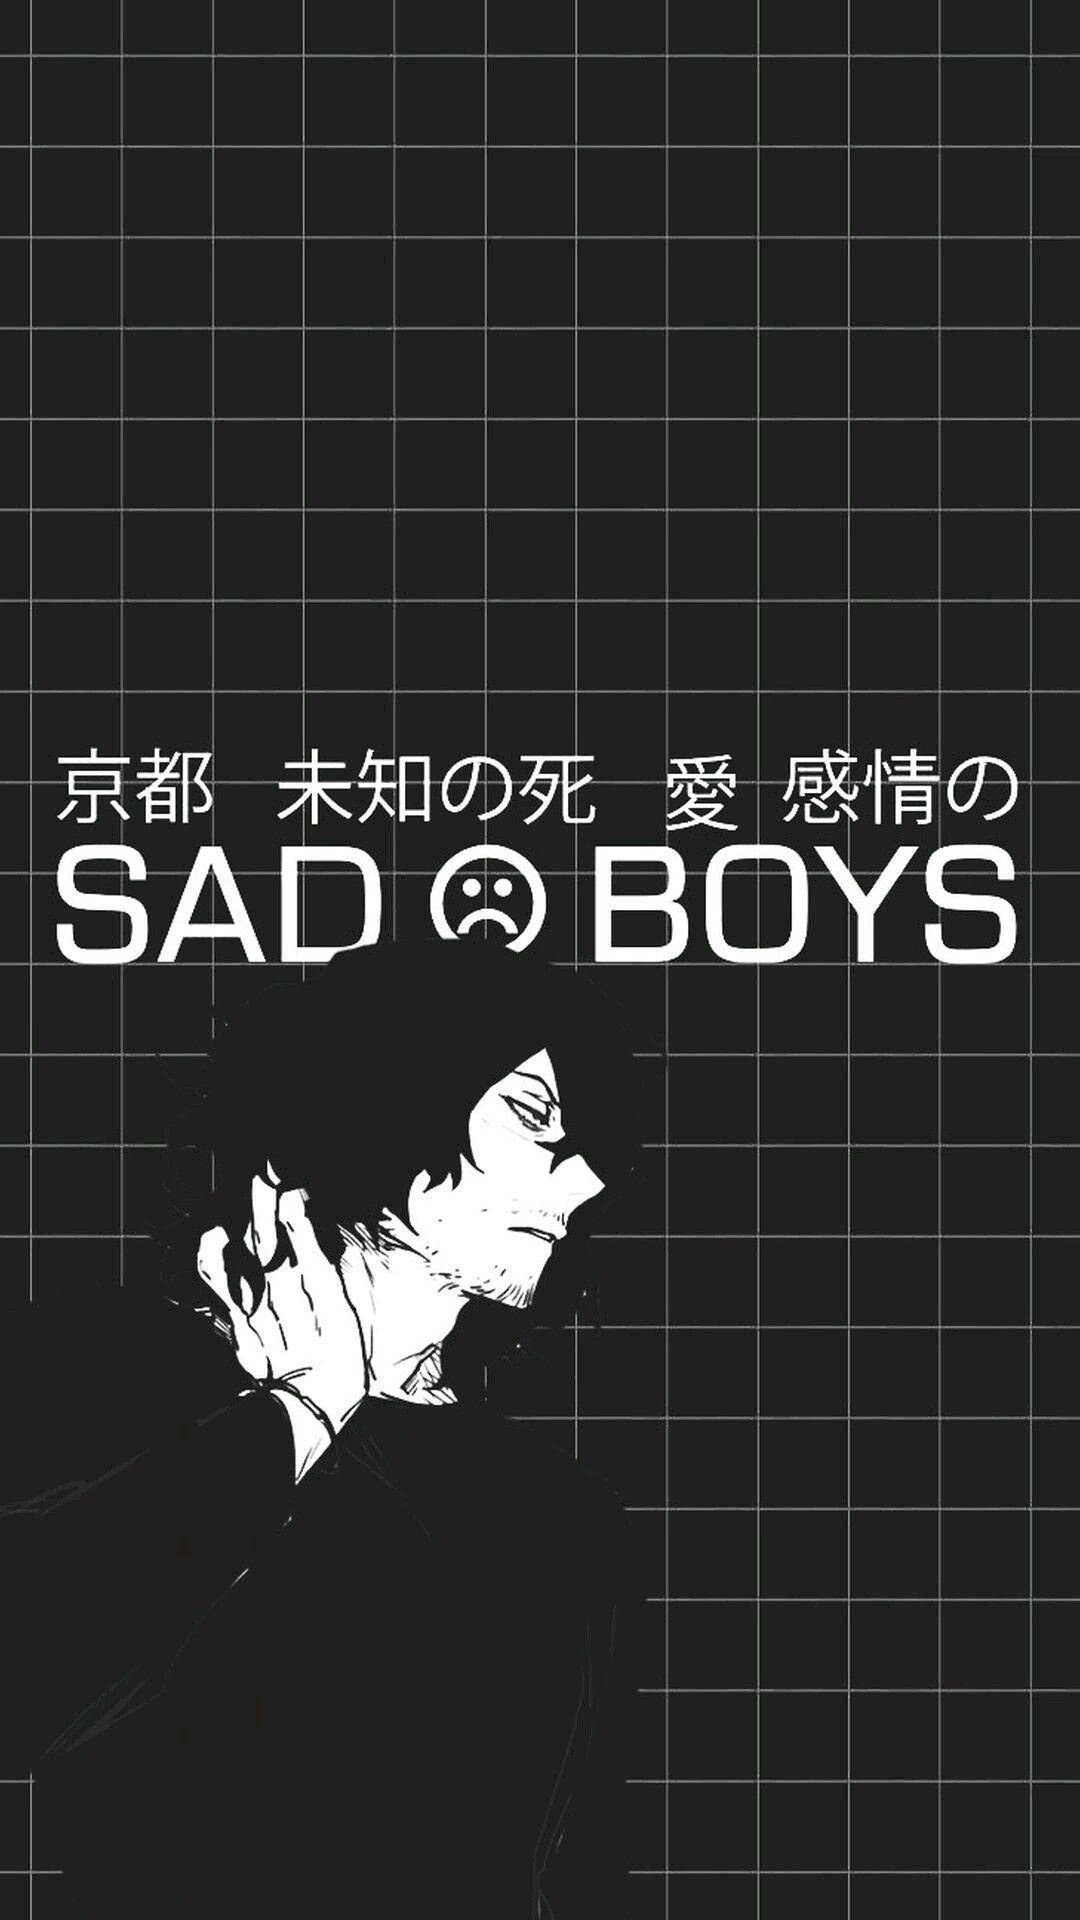 Dark Anime Aesthetic Sad Boys Wallpaper